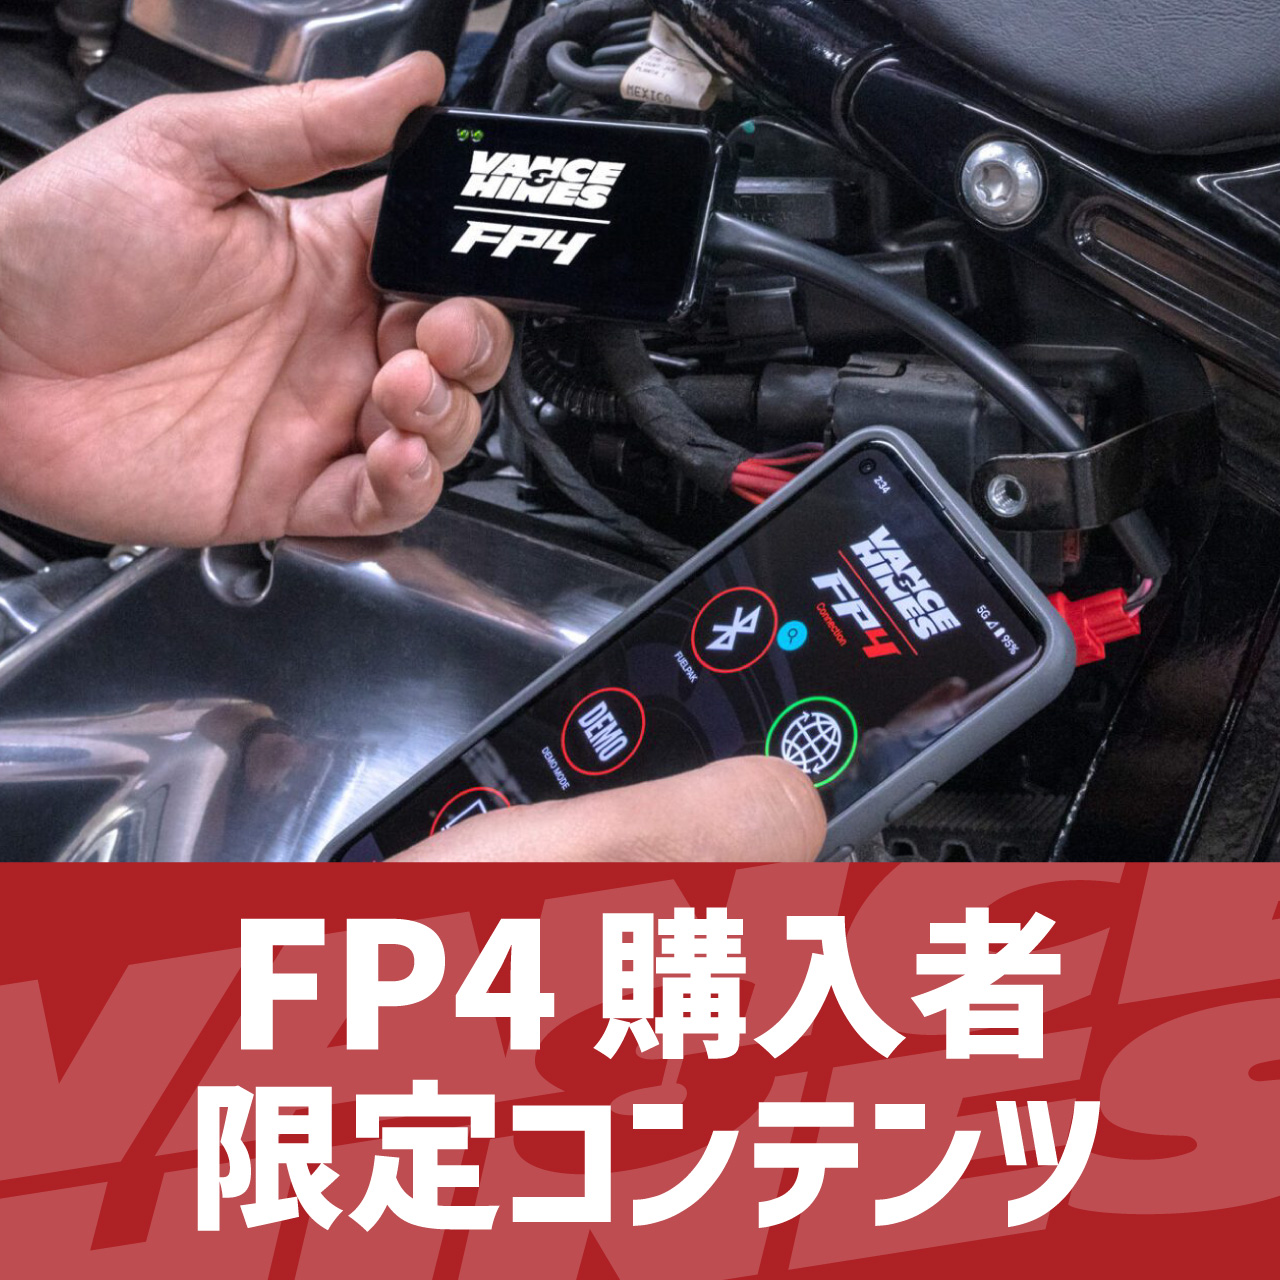 FP4購入者限定コンテンツ【無料】